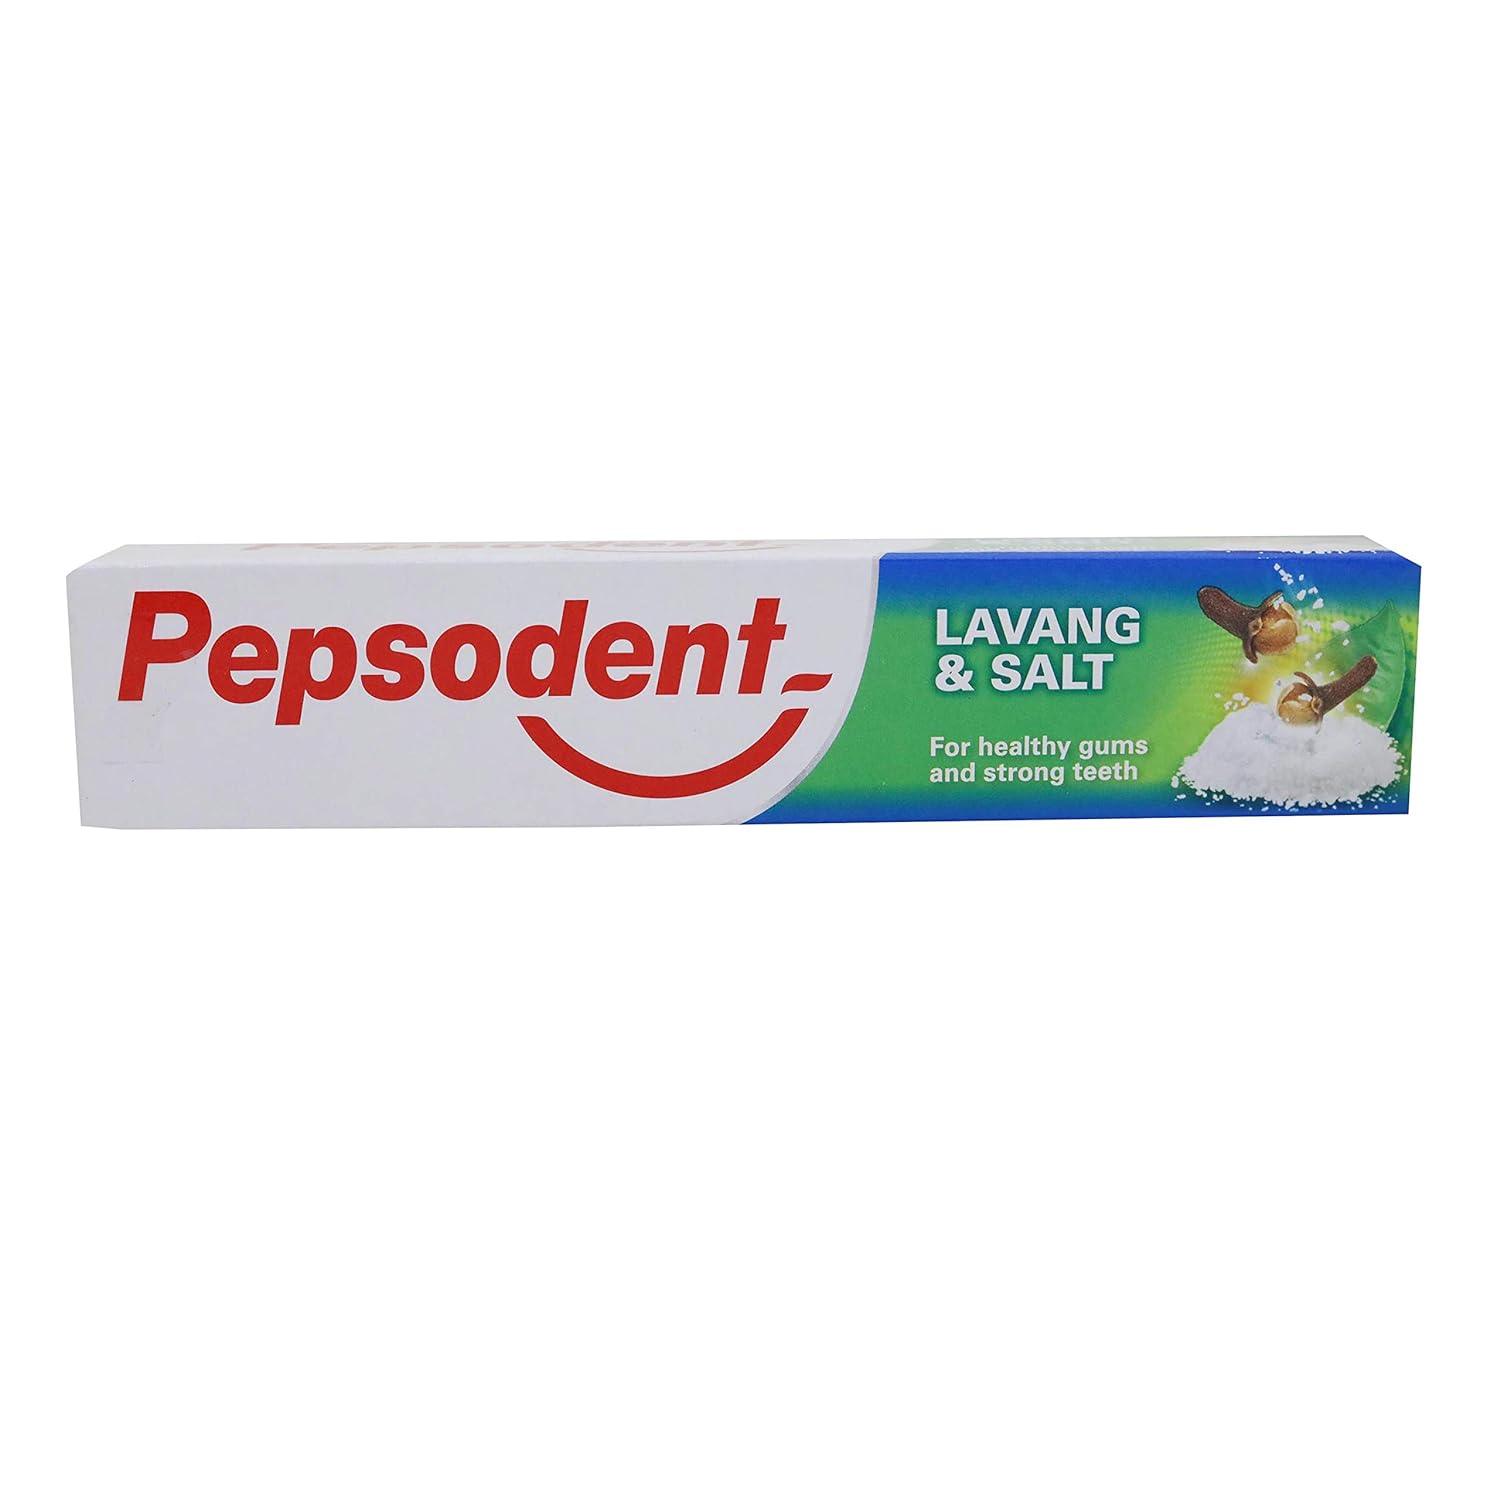 Pepsodent Lavang & Salt Toothpaste